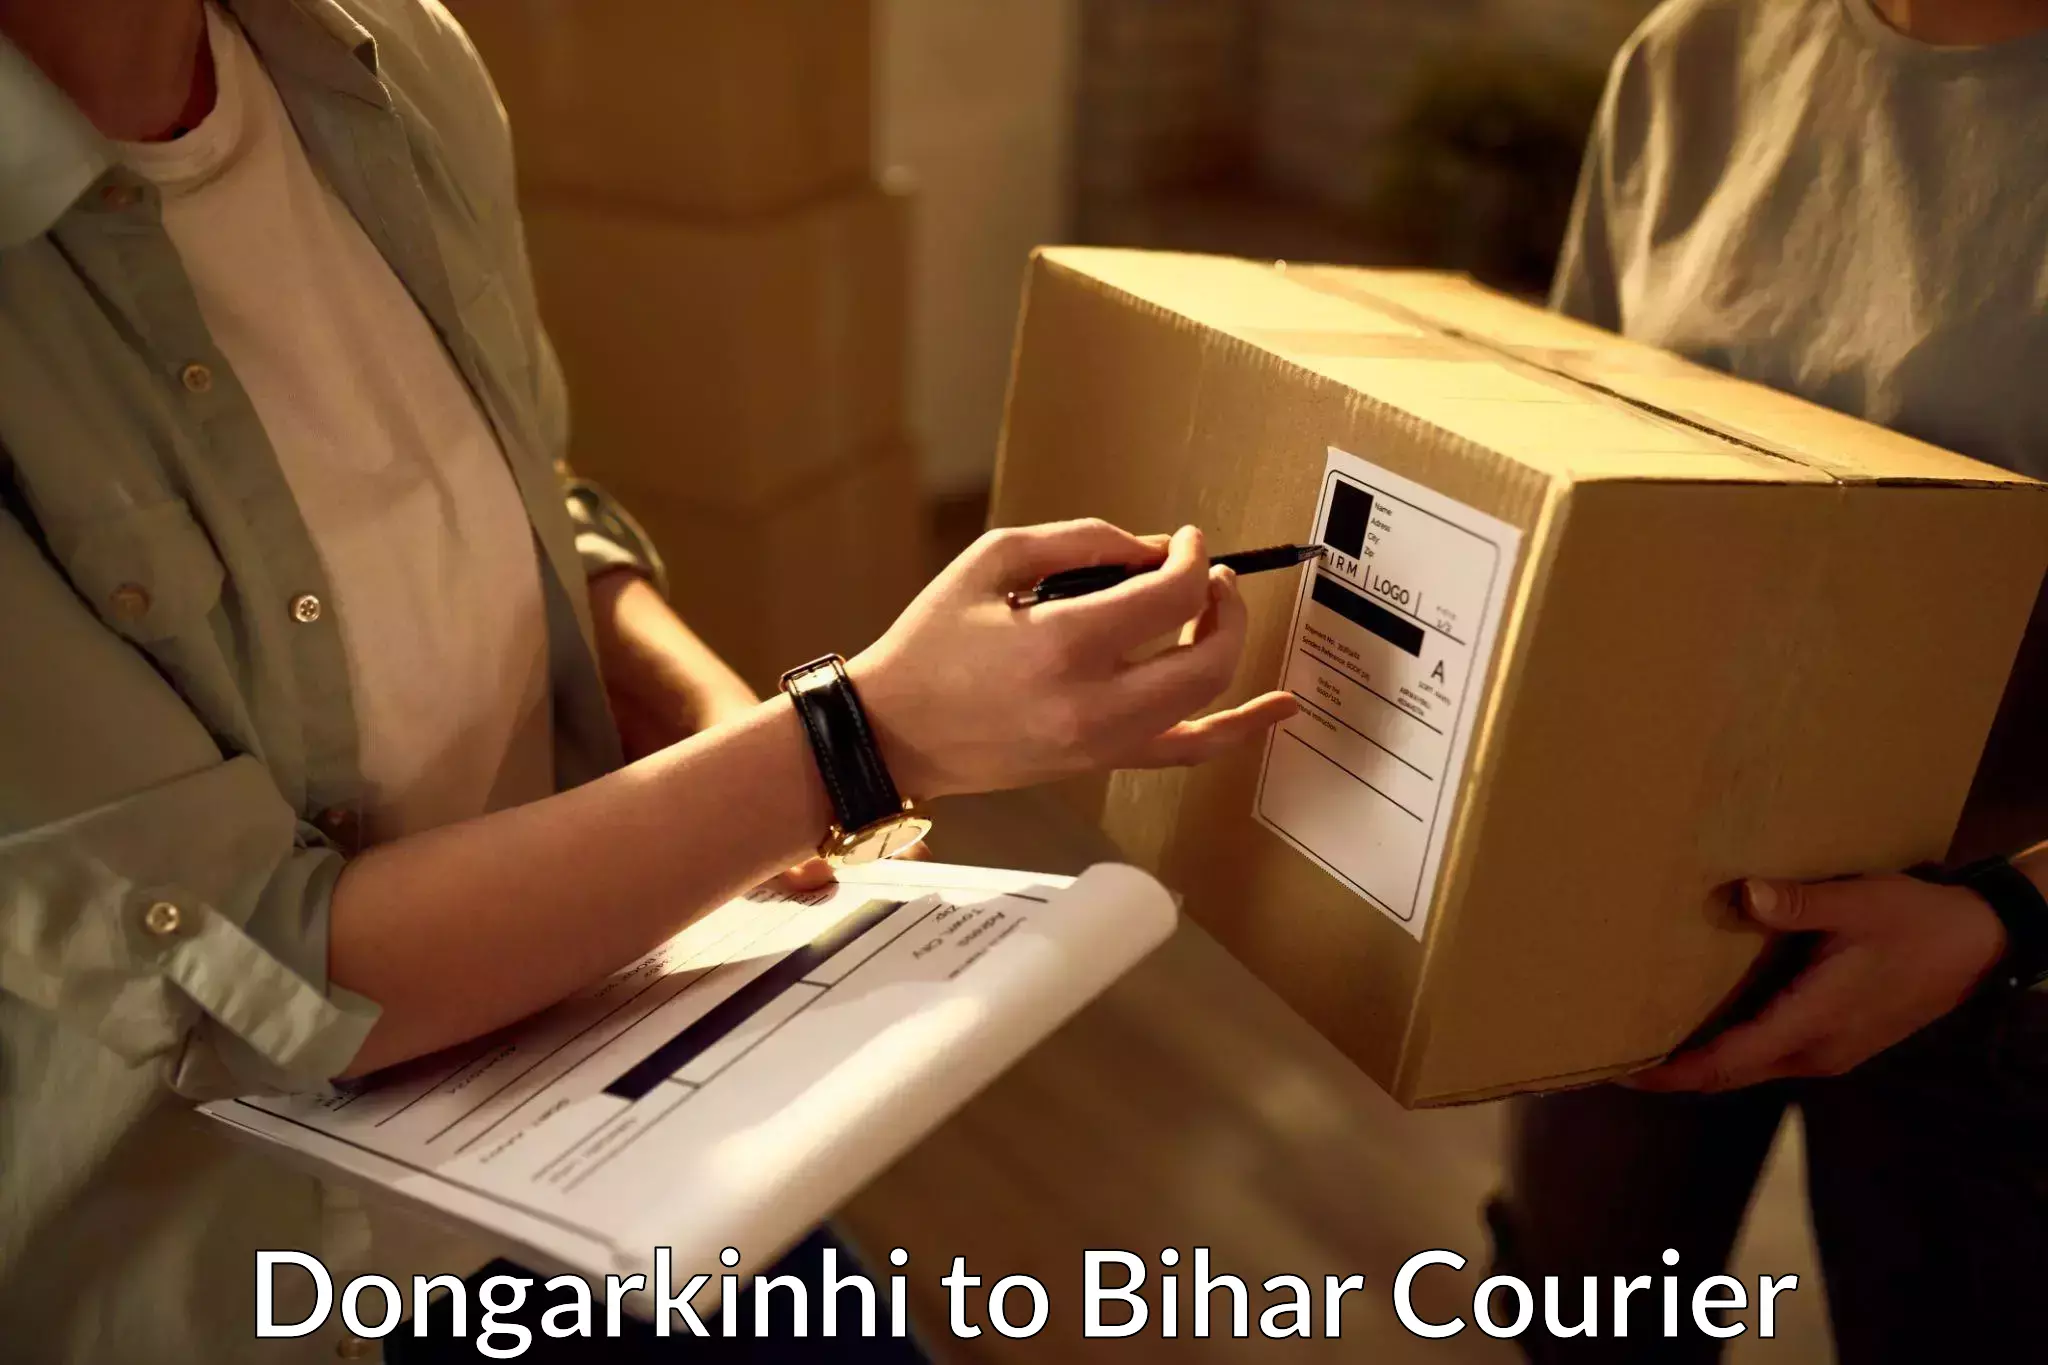 Bulk courier orders Dongarkinhi to Mirganj